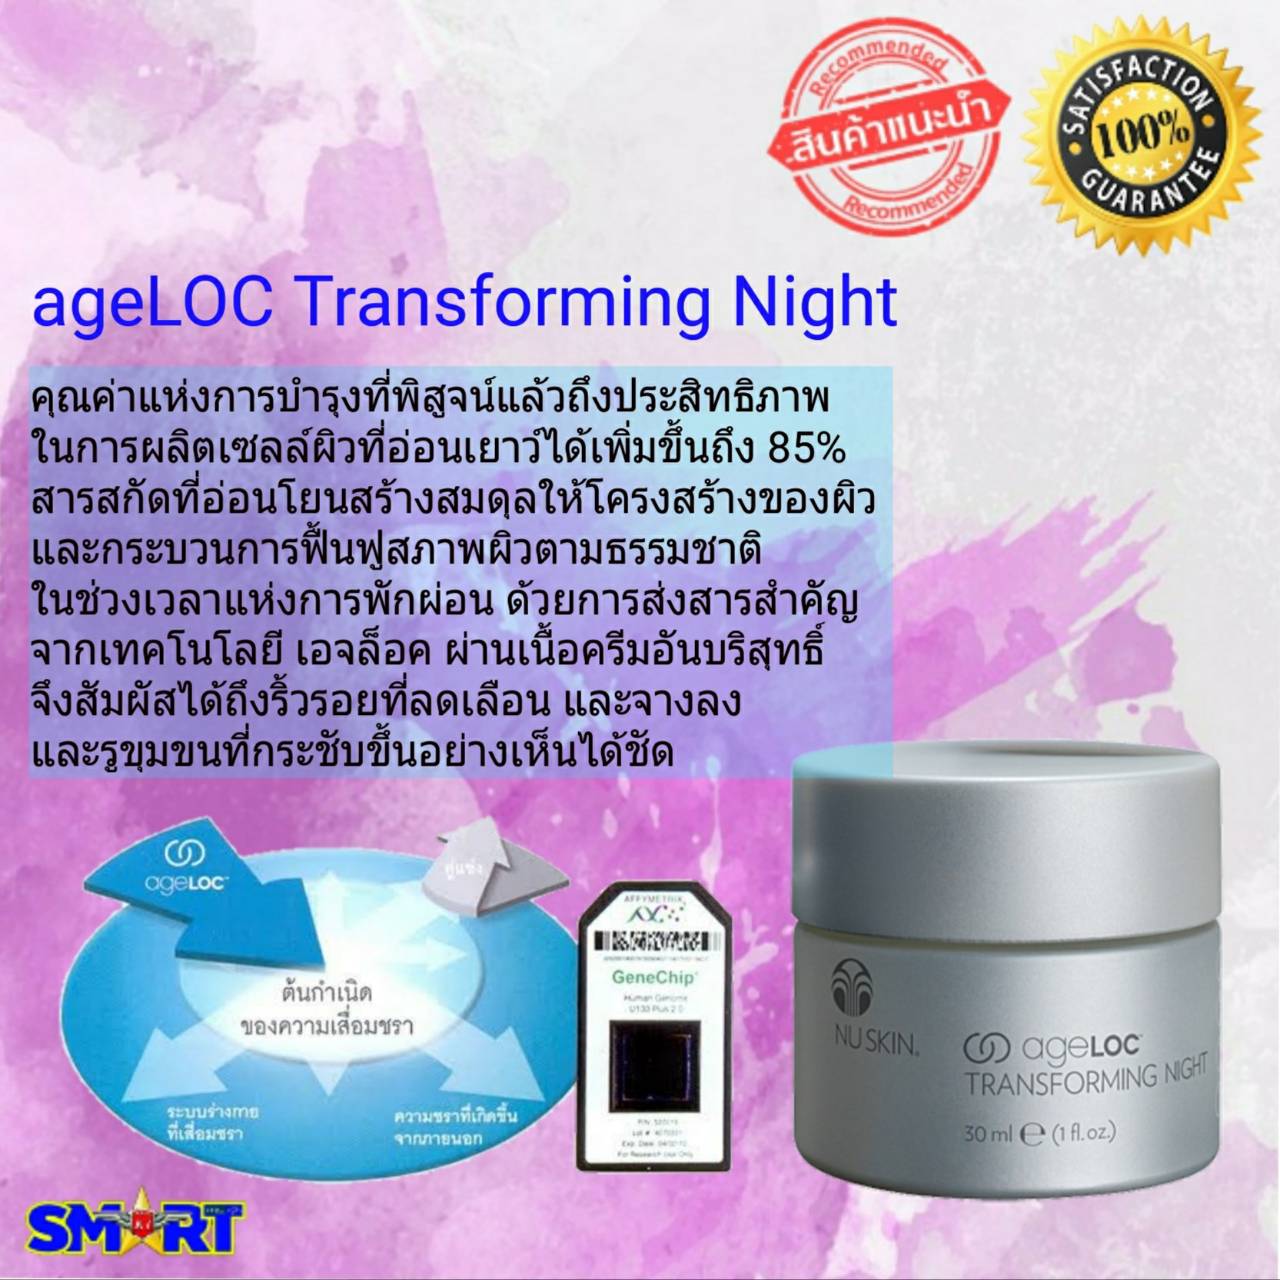 <Img src =”ageloc transformation015.jpg” alt=“ageloc transforming night”>